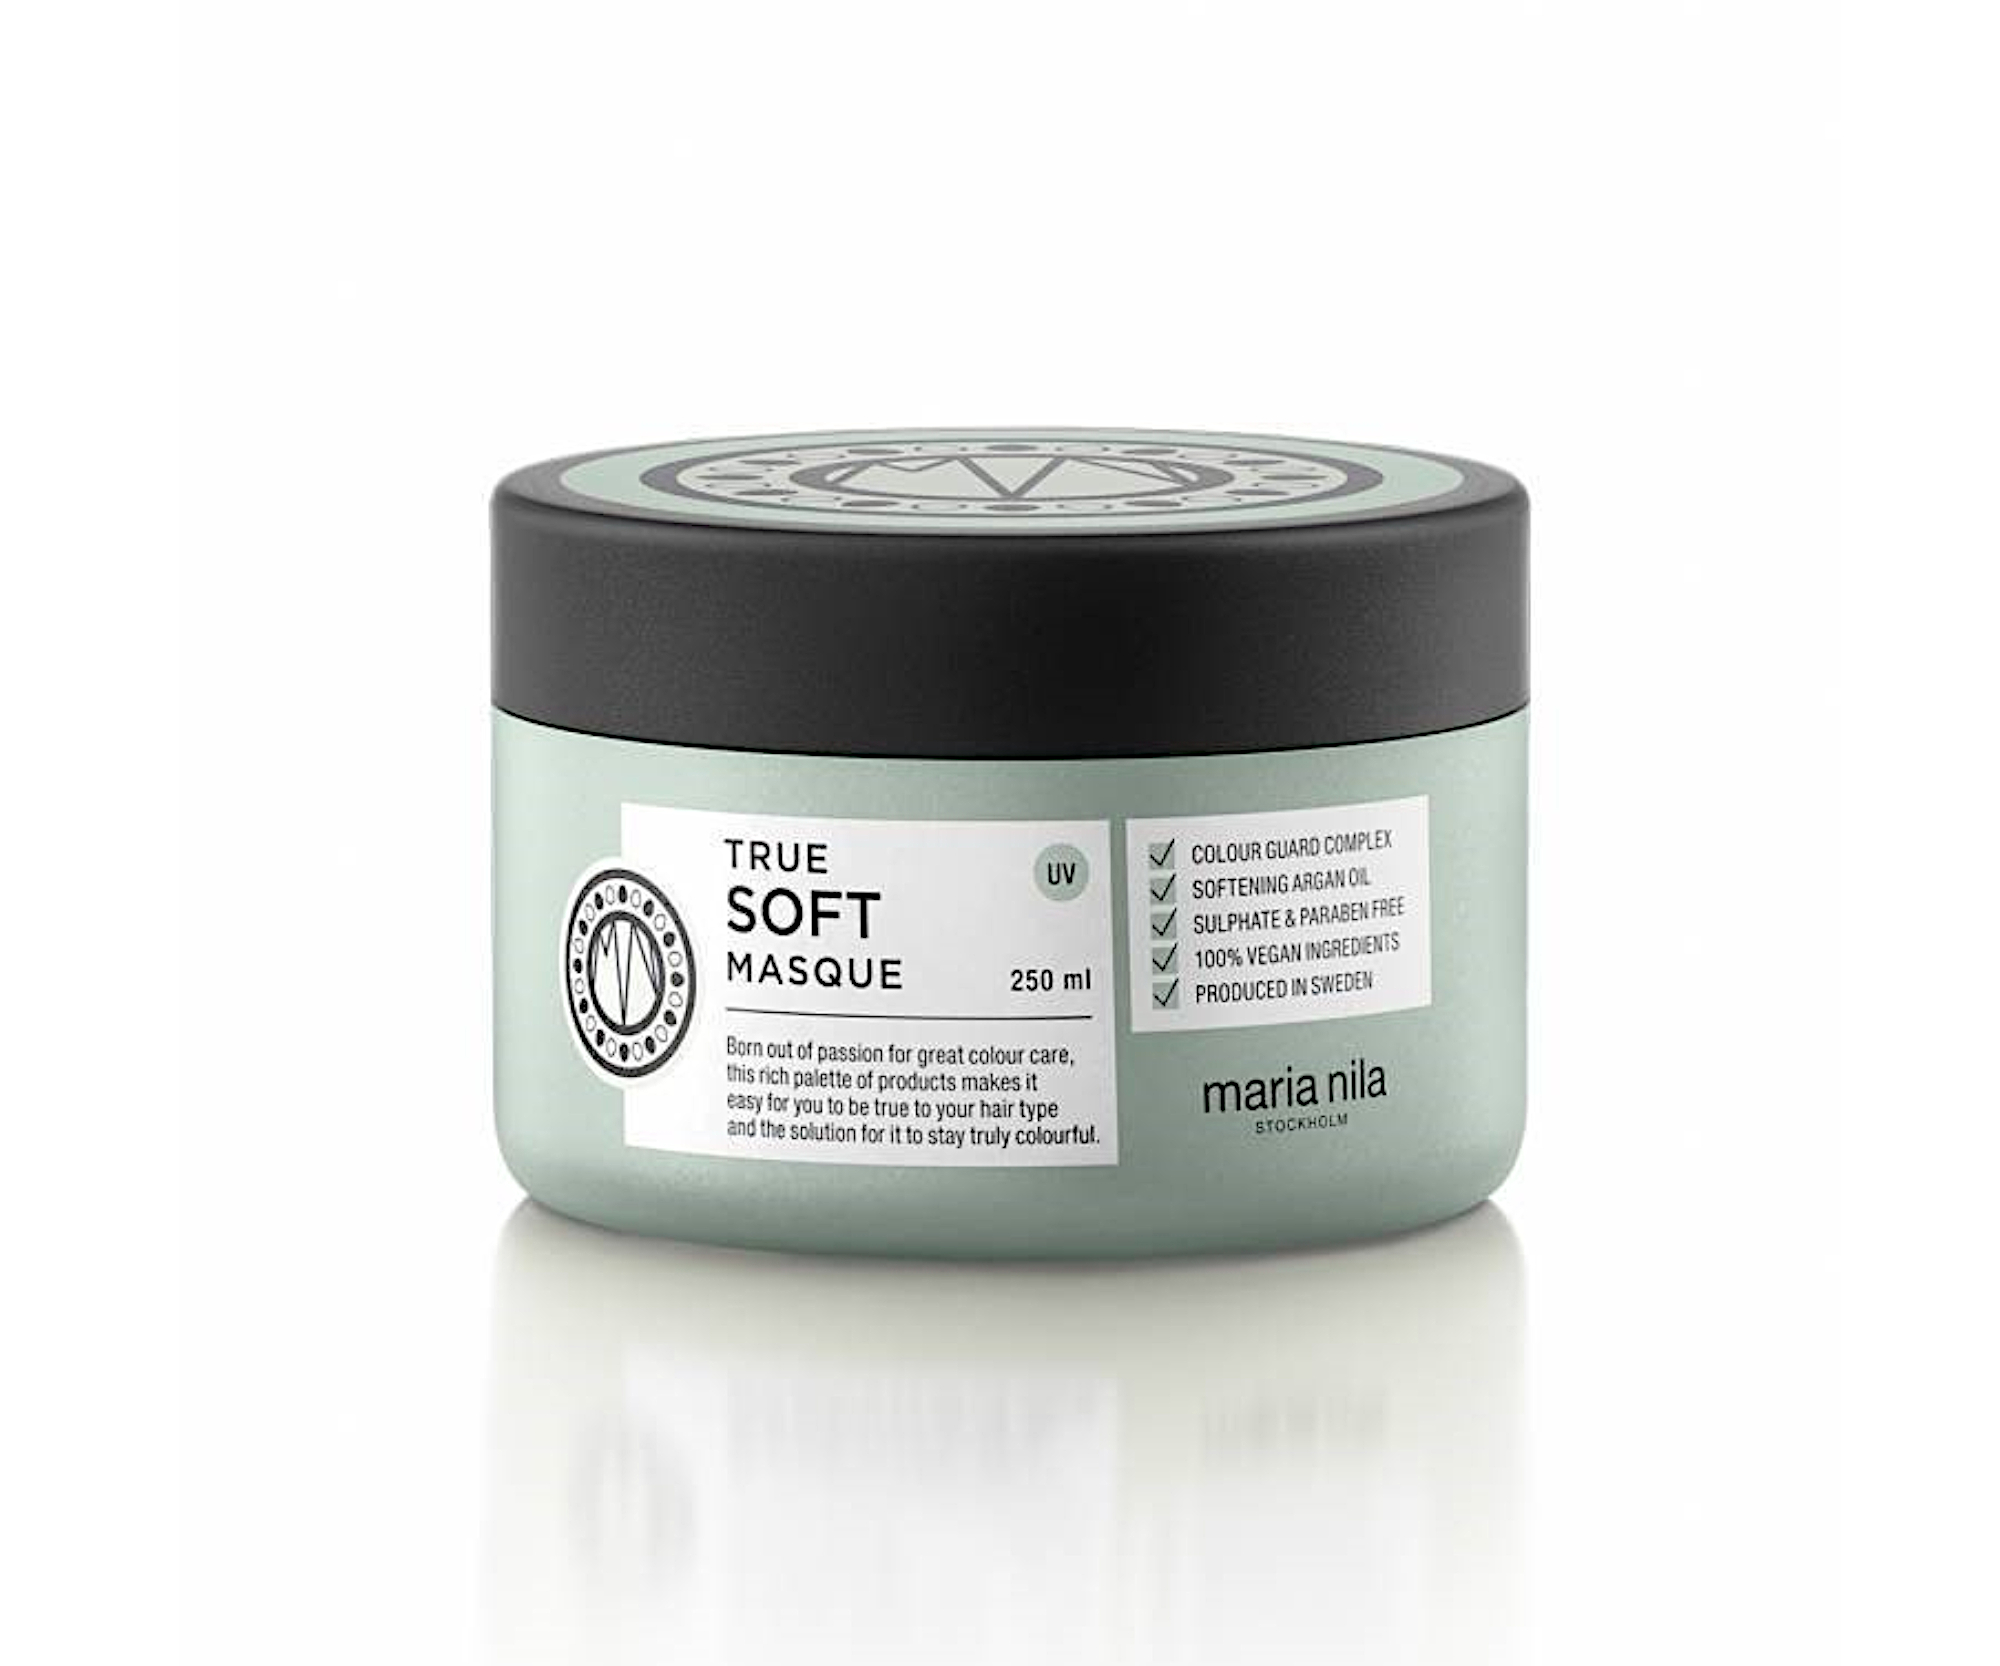 Hydratační maska pro suché vlasy s arganovým olejem Maria Nila True Soft Masque - 250 ml (NF02-3632) + DÁREK ZDARMA